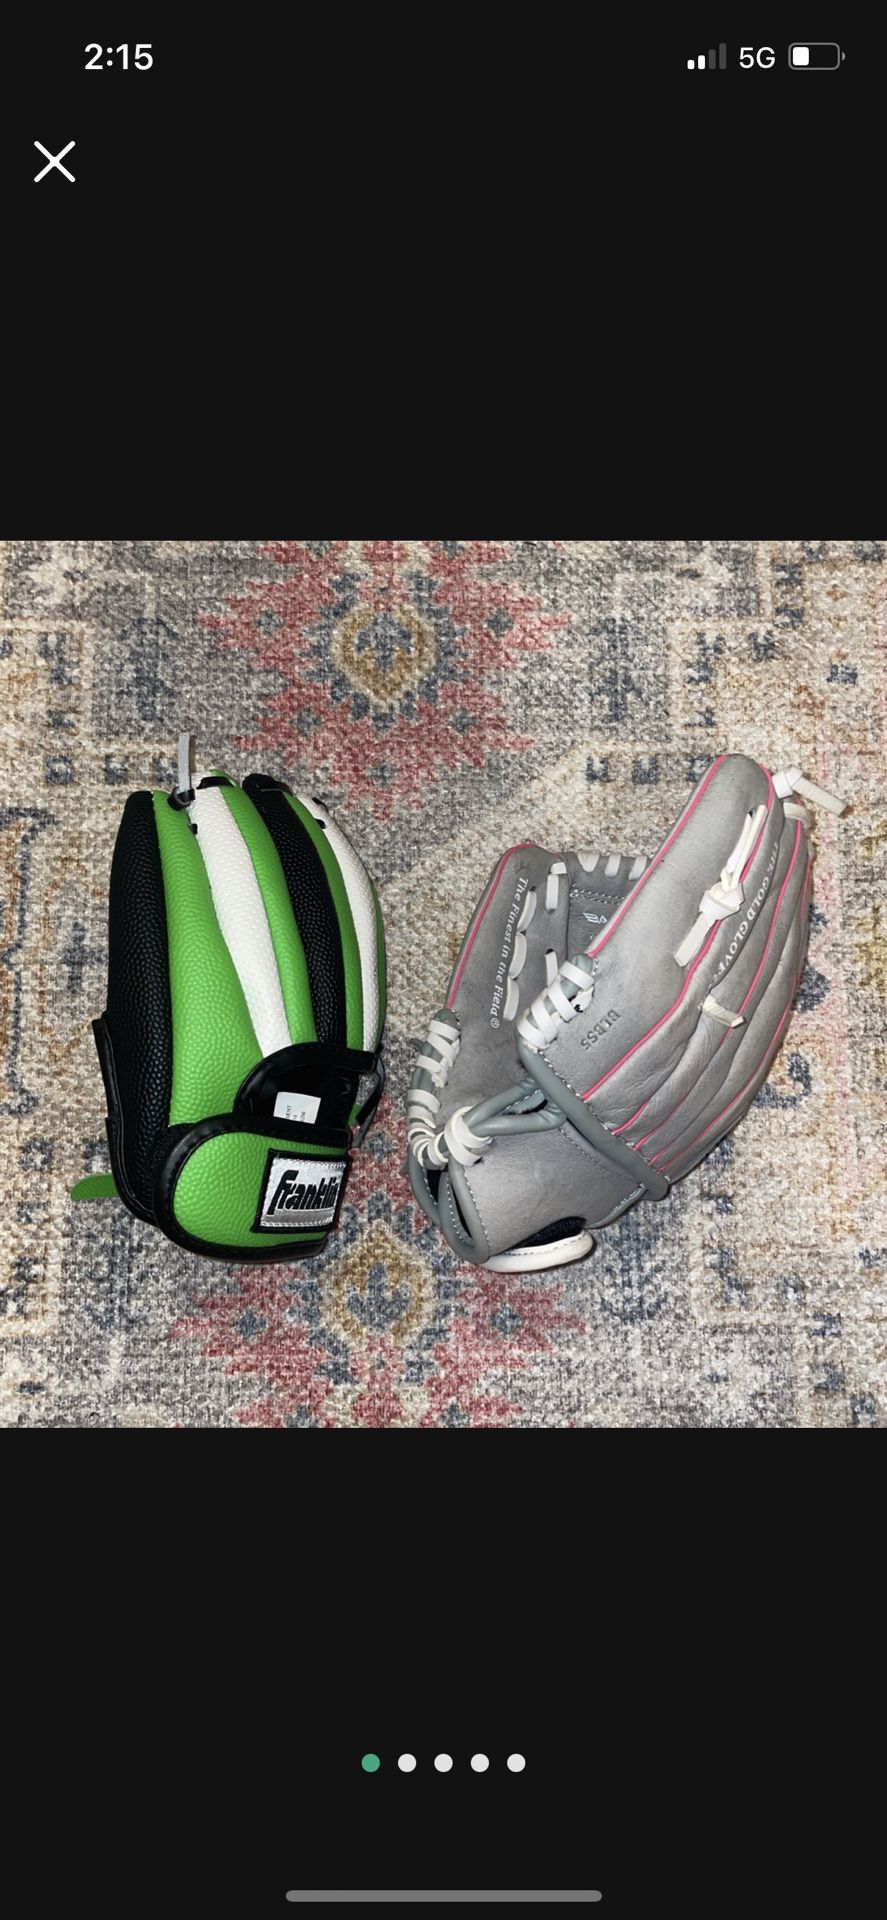 Youth Softball & Baseball Glove